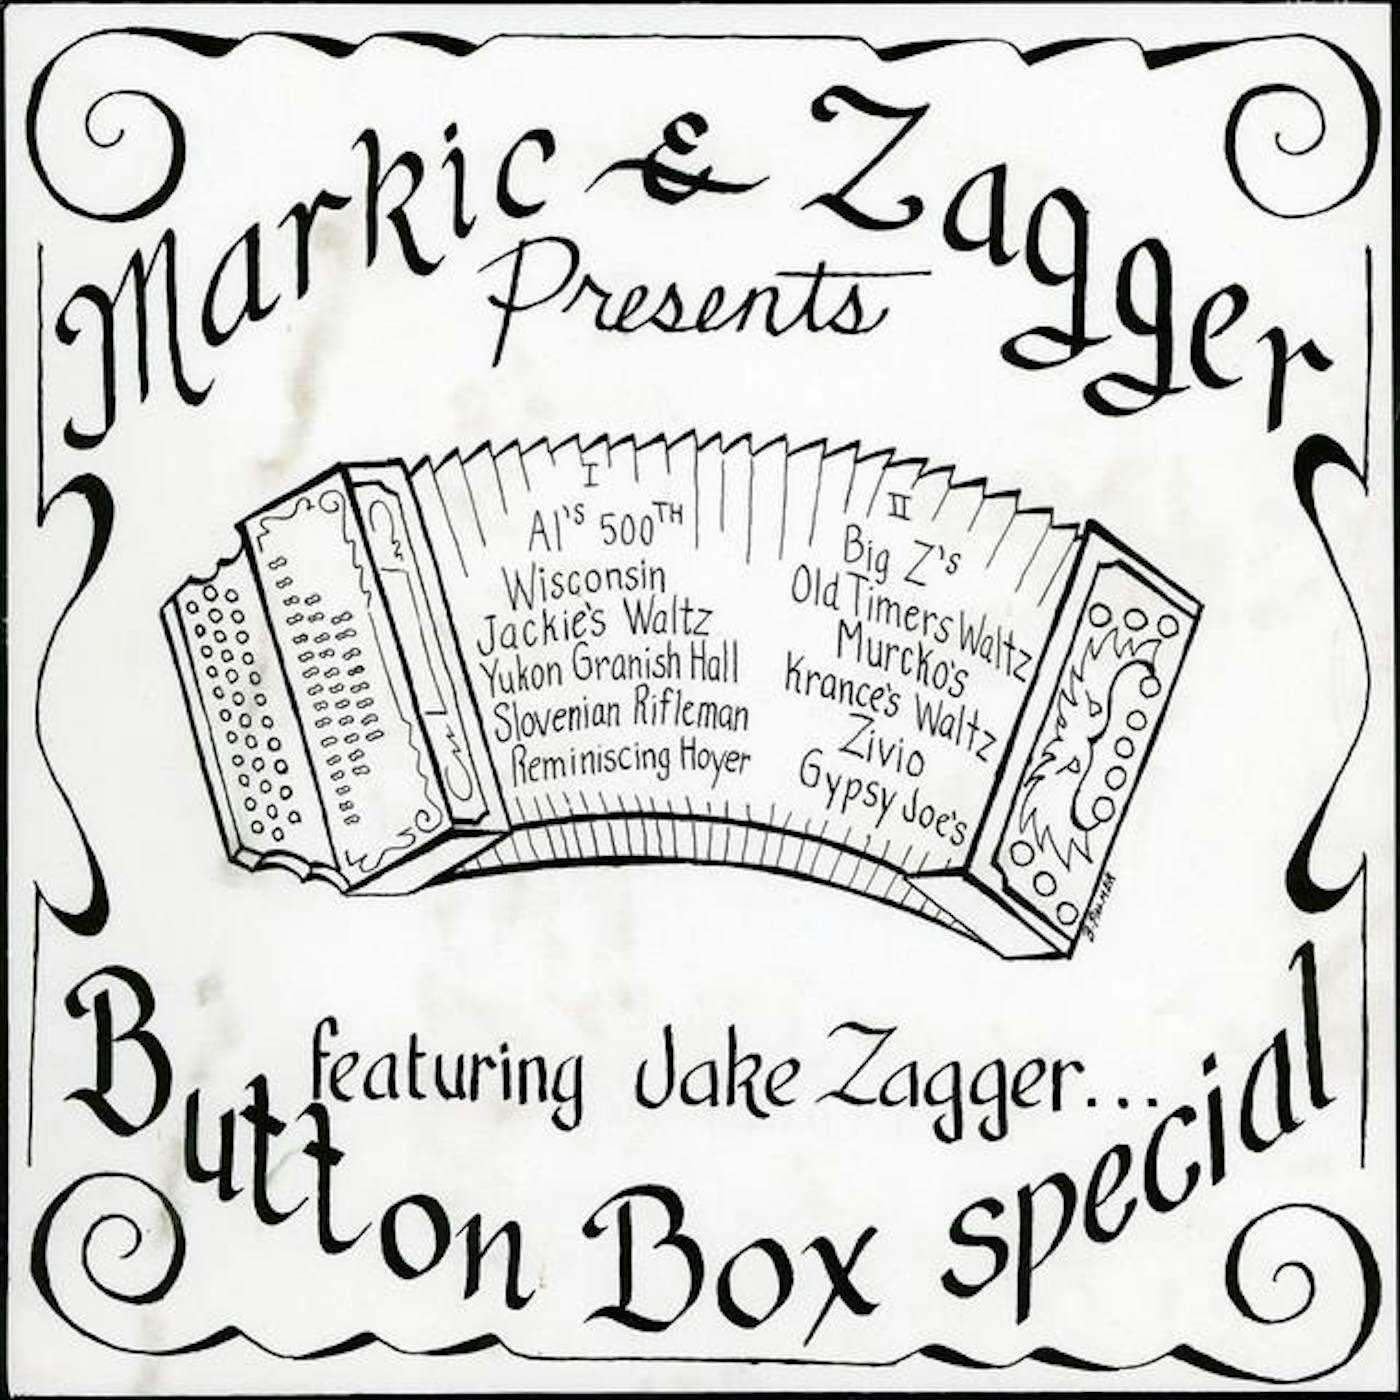 Markic & Zagger Orchestra